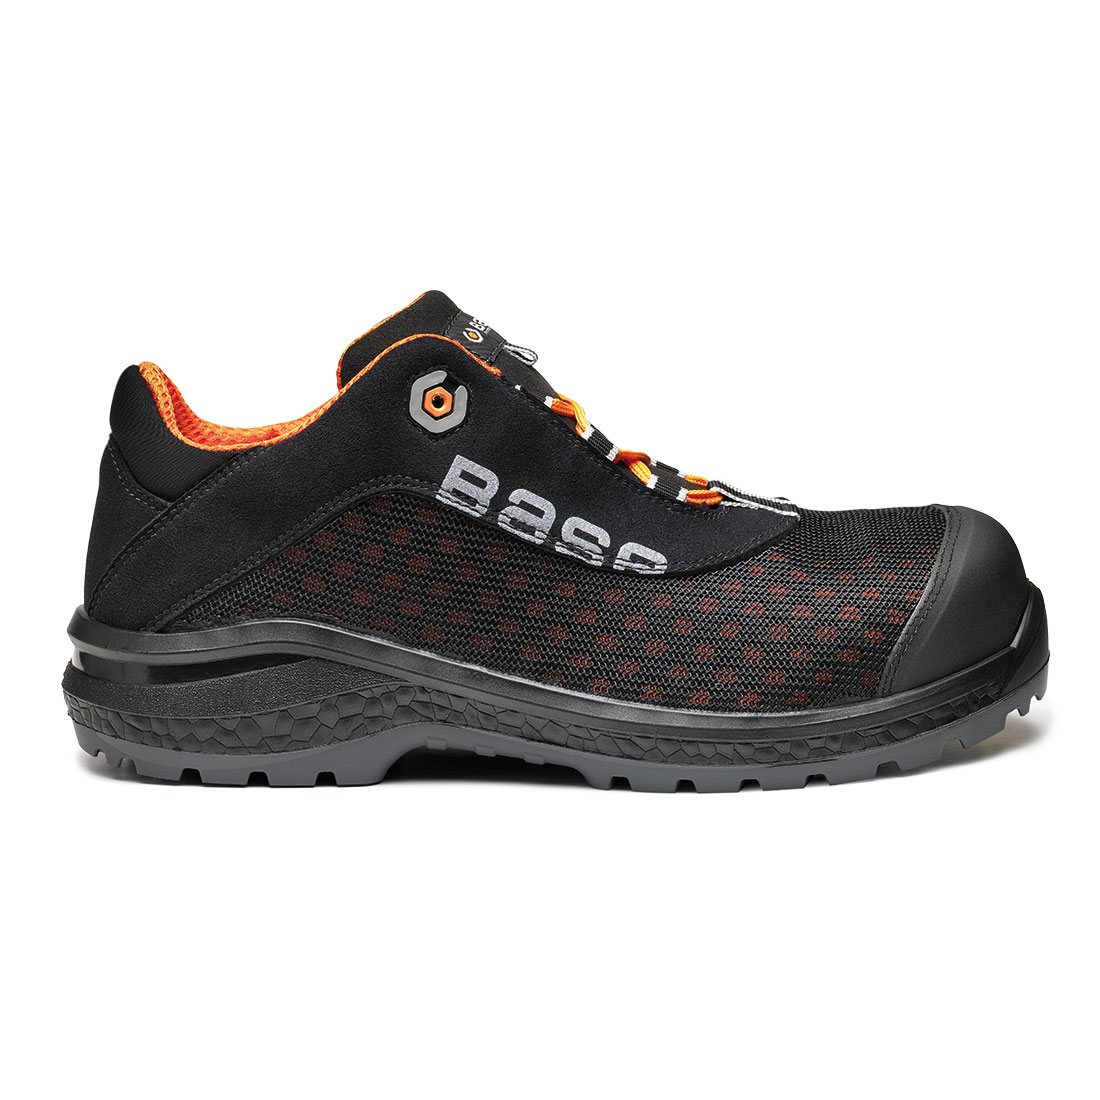 Base Be-Fit  Low Shoes Black/Orange B0878